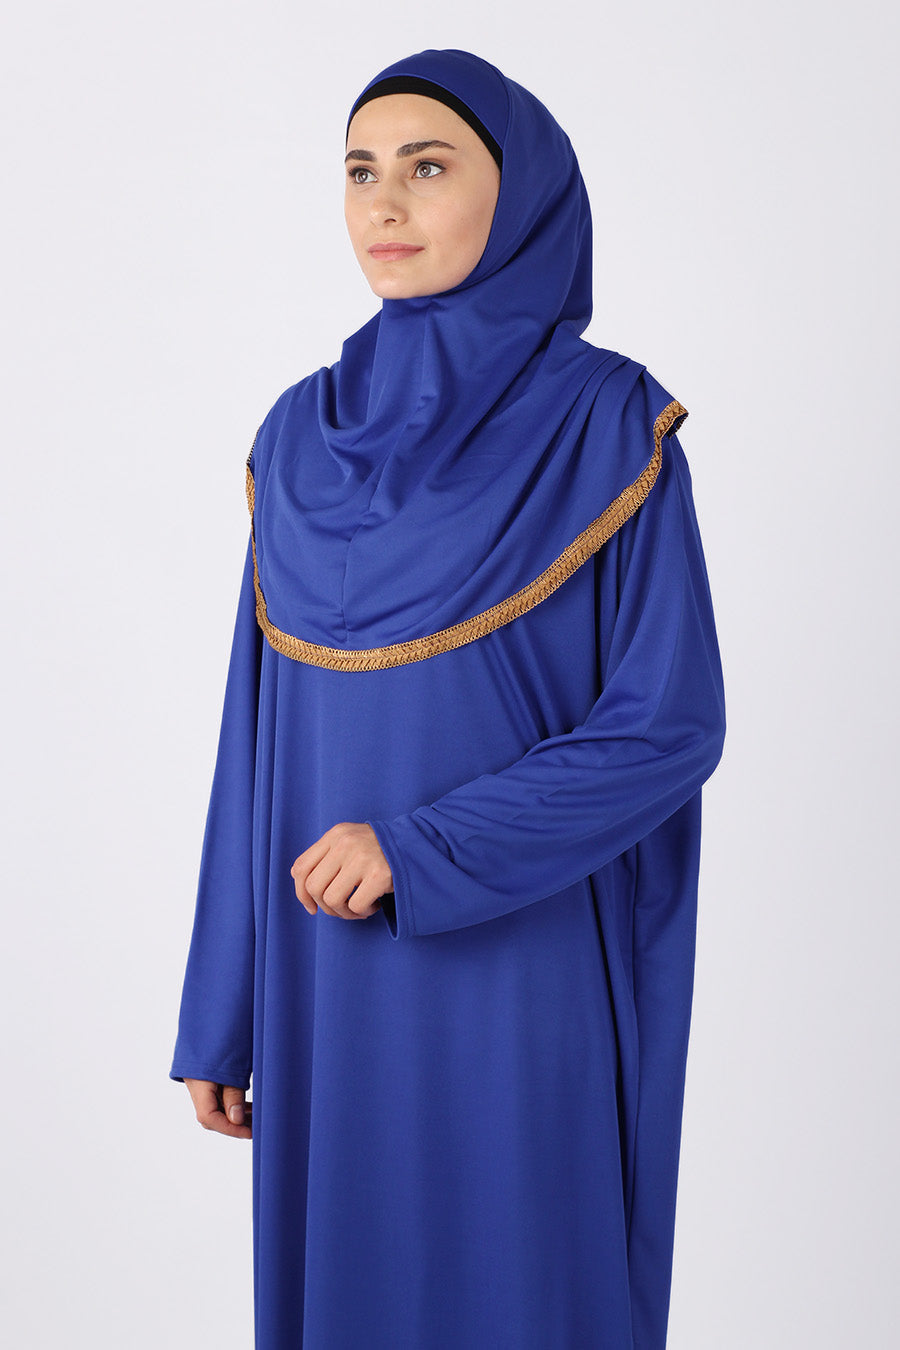 Royal Blue with Lace Turkish Prayer Dress